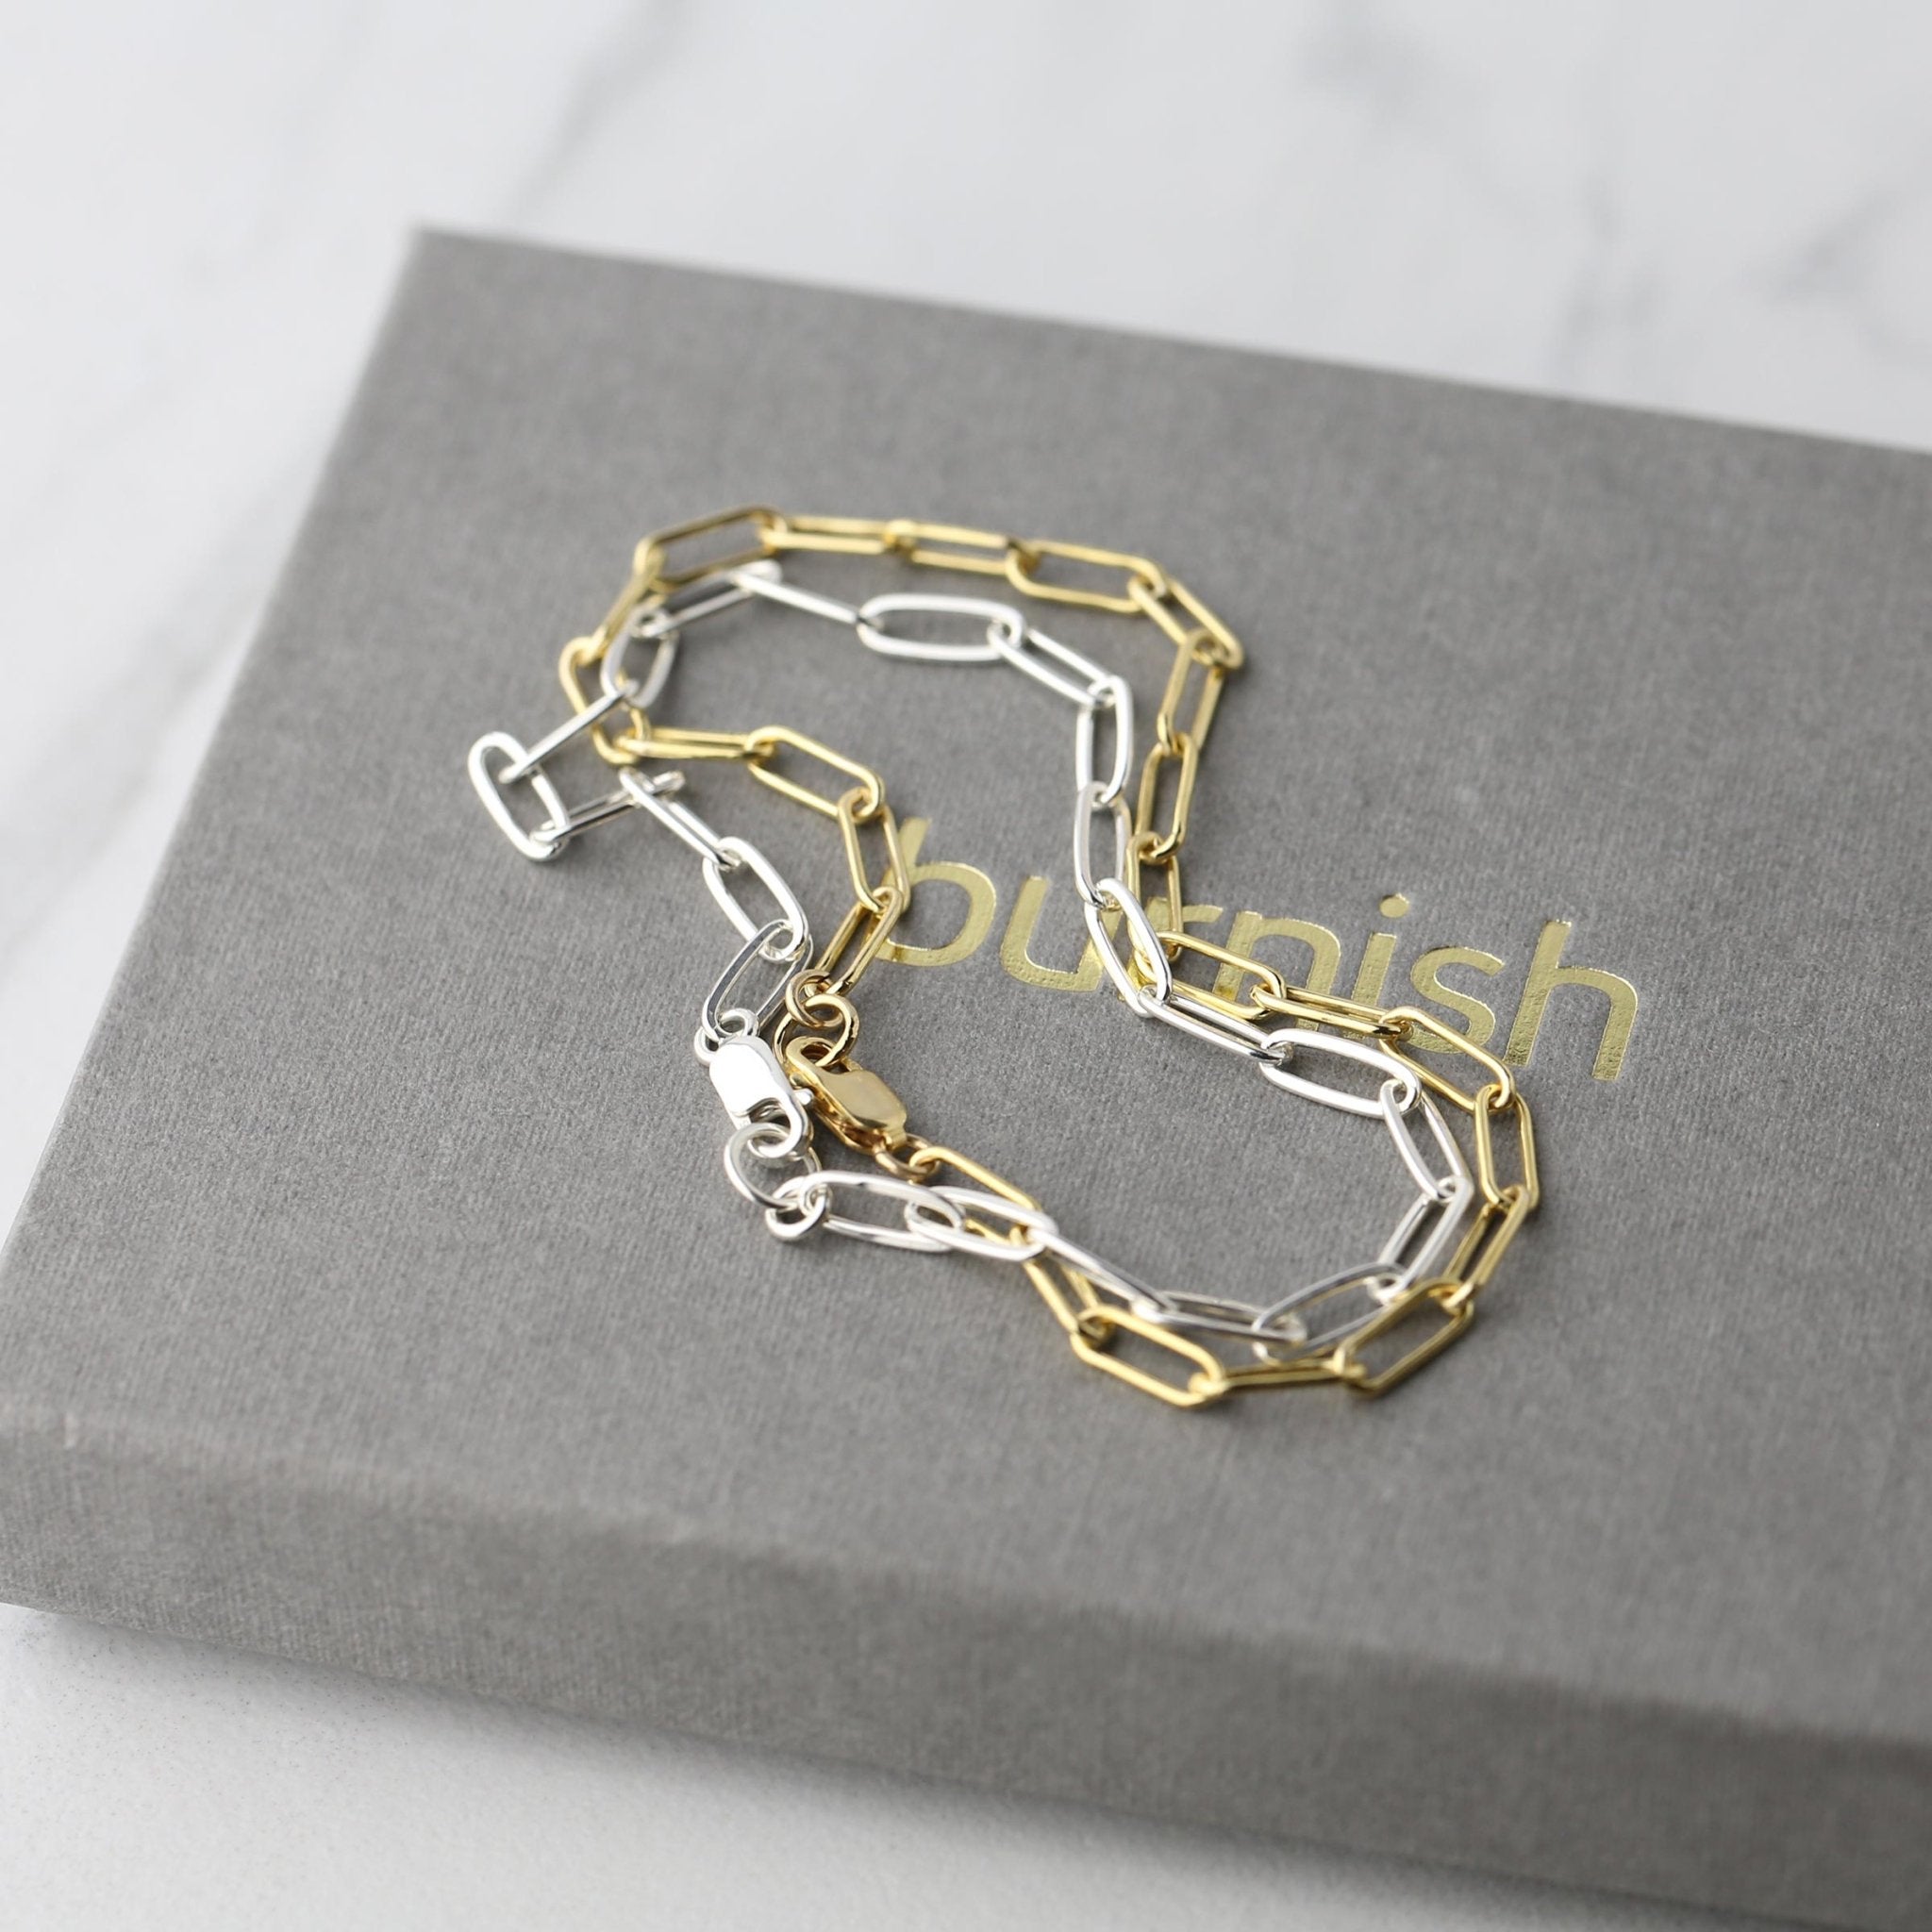 Elegant Elongated Link Chain Bracelet handmade by Burnish